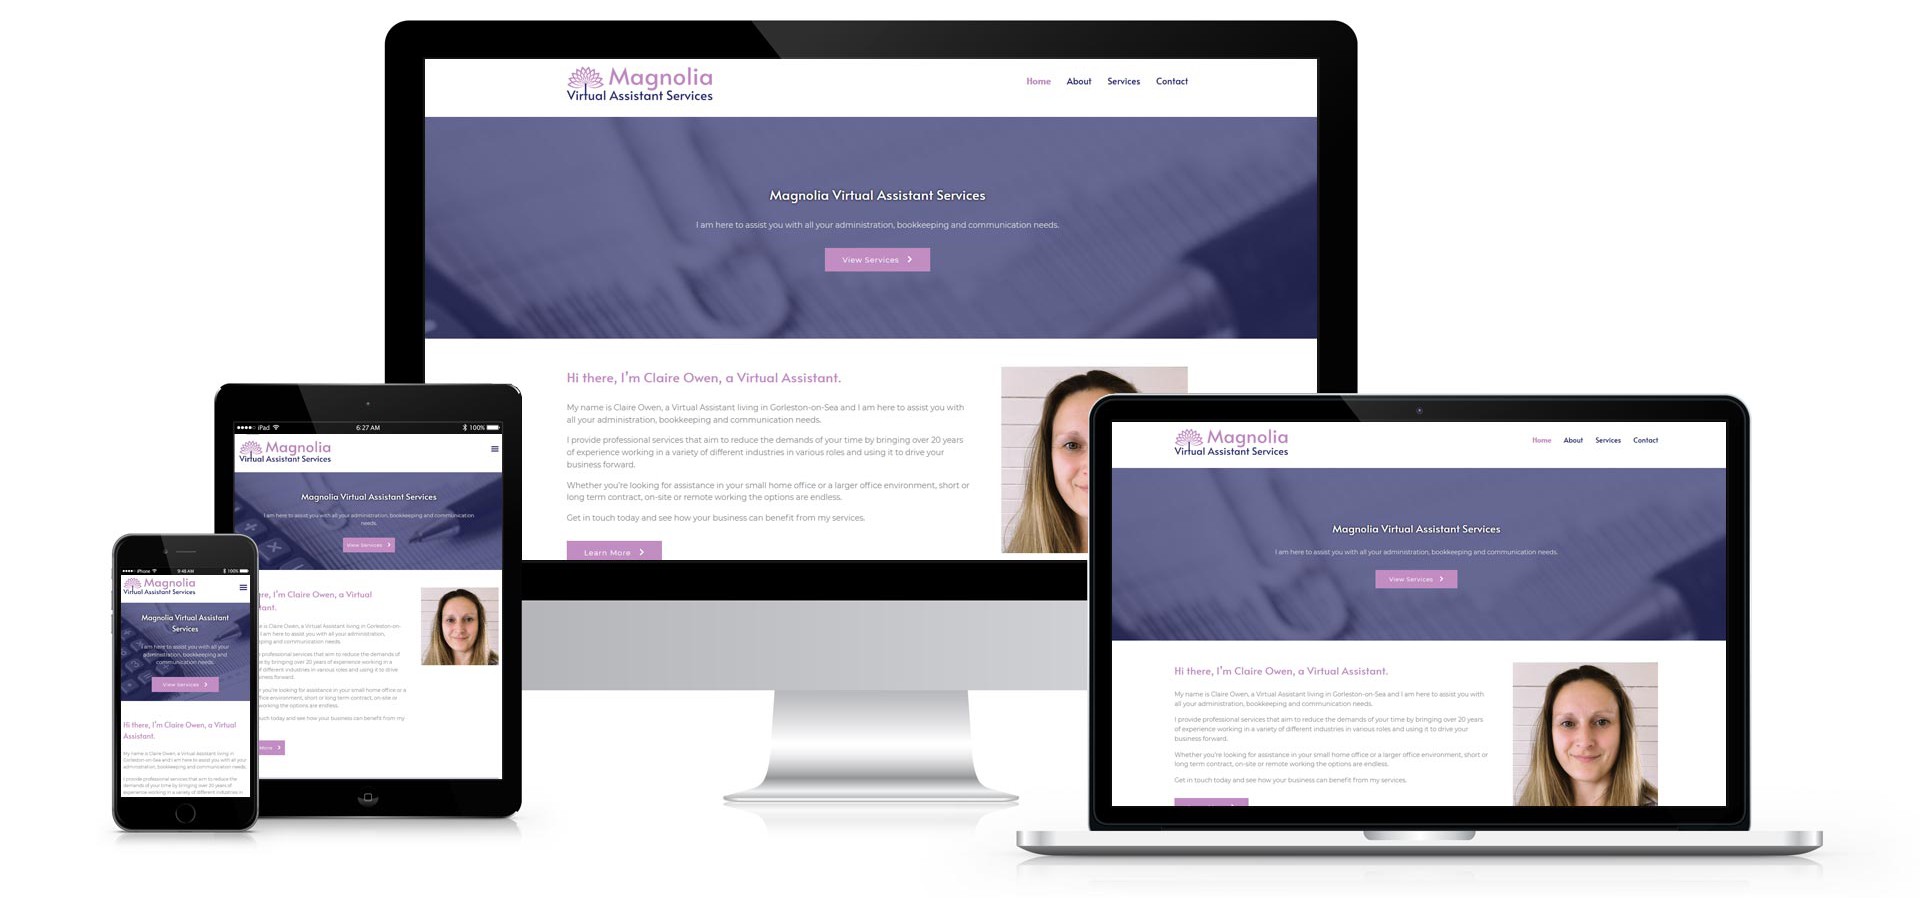 Magnolia Virtual Assistant Services - Responsive Website Design